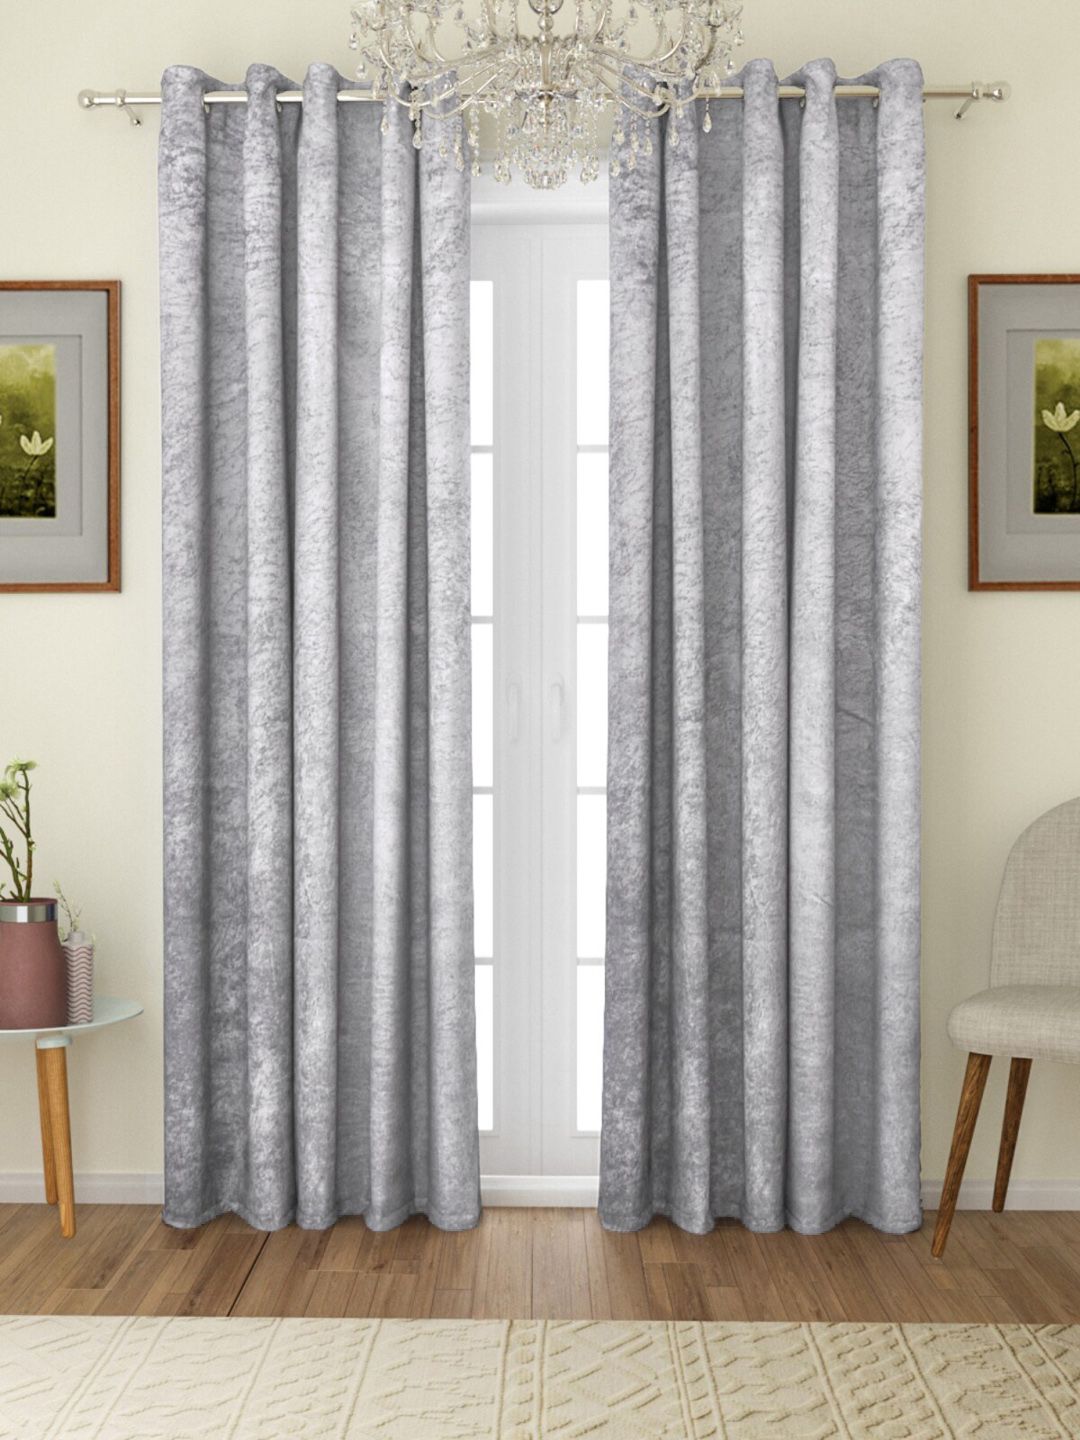 ROMEE Silver-Toned & Grey Set of 2 Solid Room Darkening Door Curtains Price in India